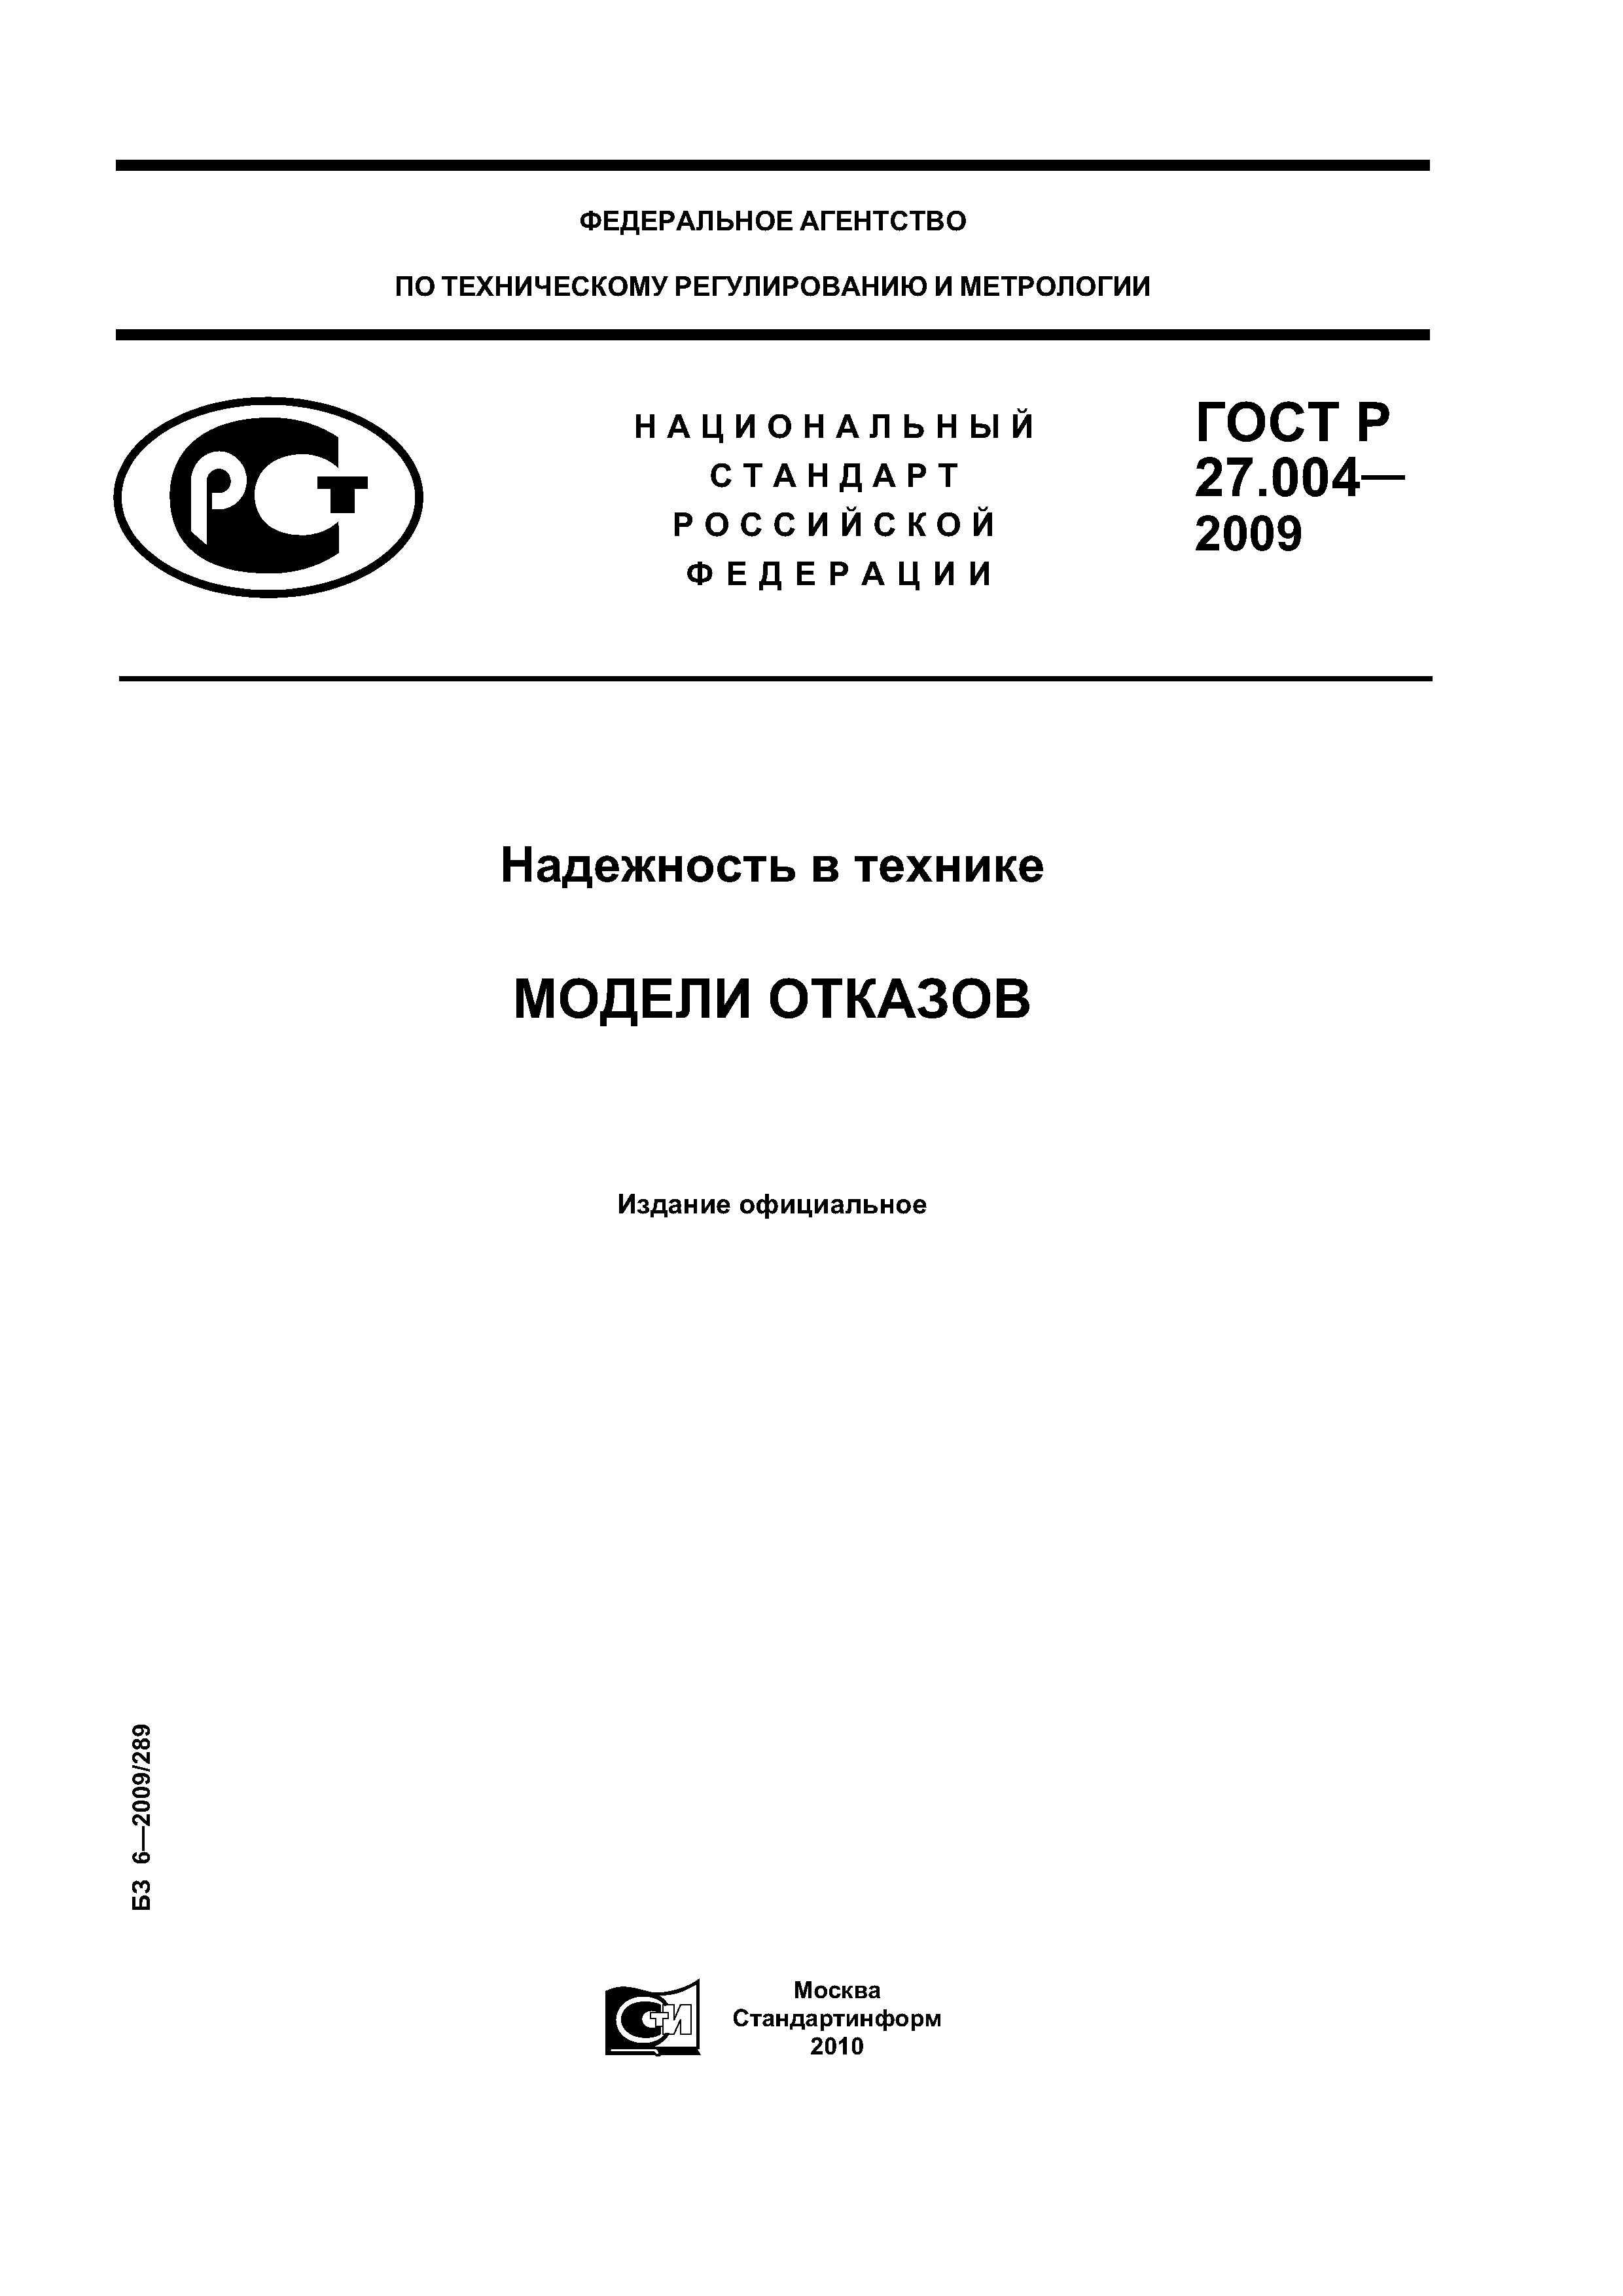 ГОСТ Р 27.004-2009